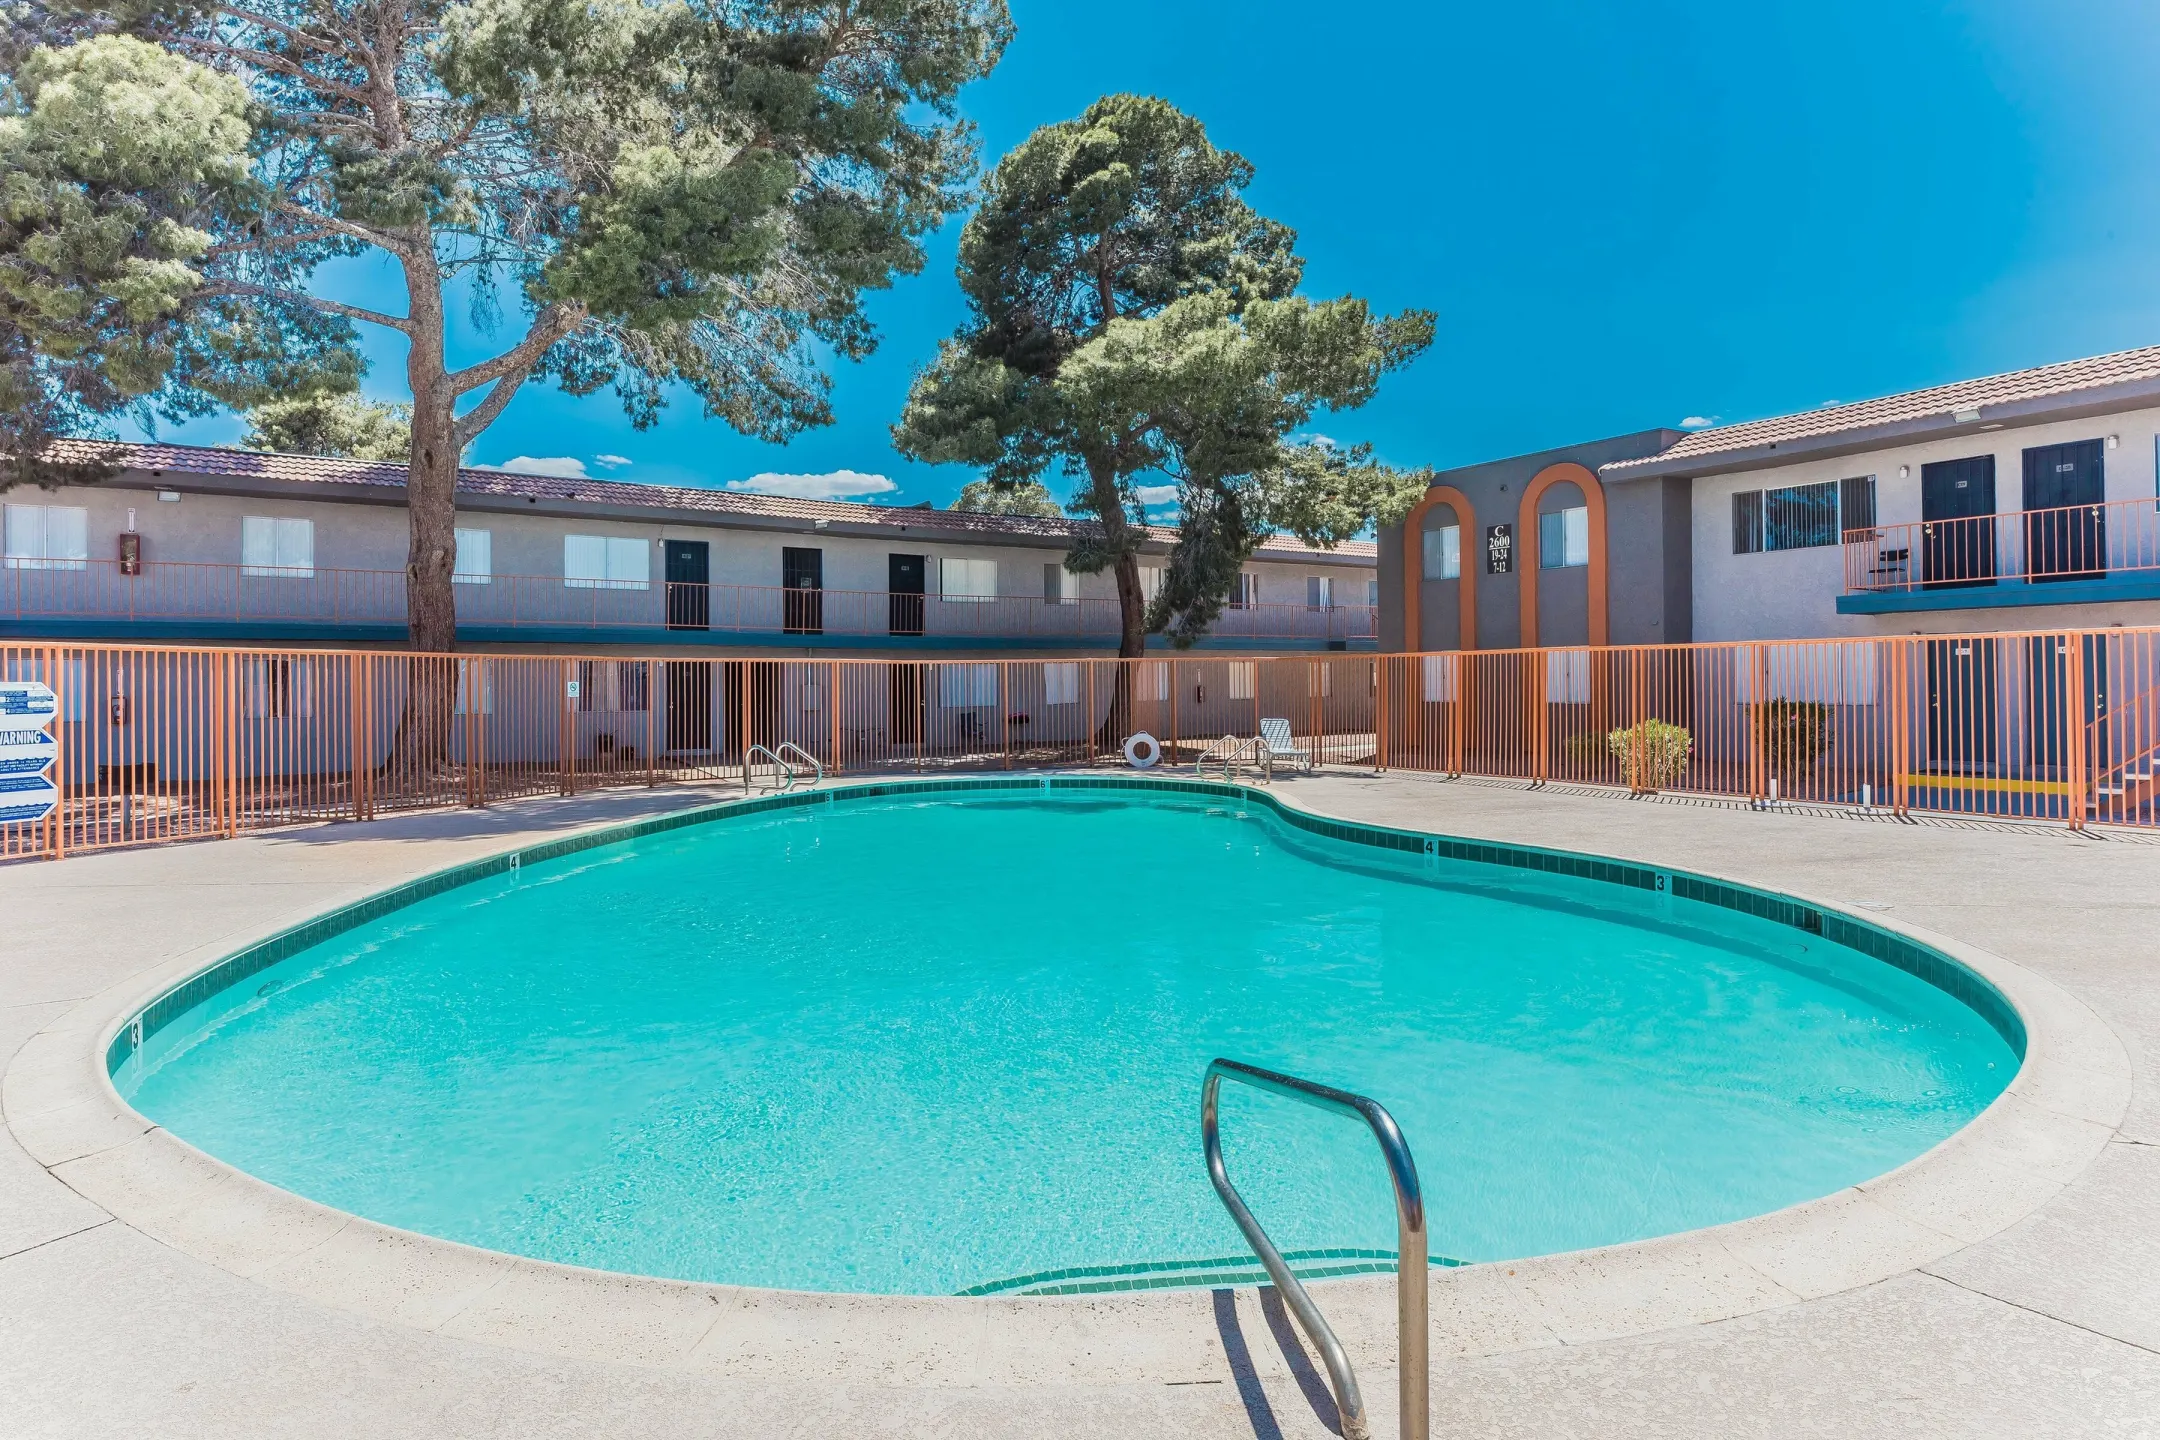 Pool - Arville Park Apartments - Las Vegas, NV